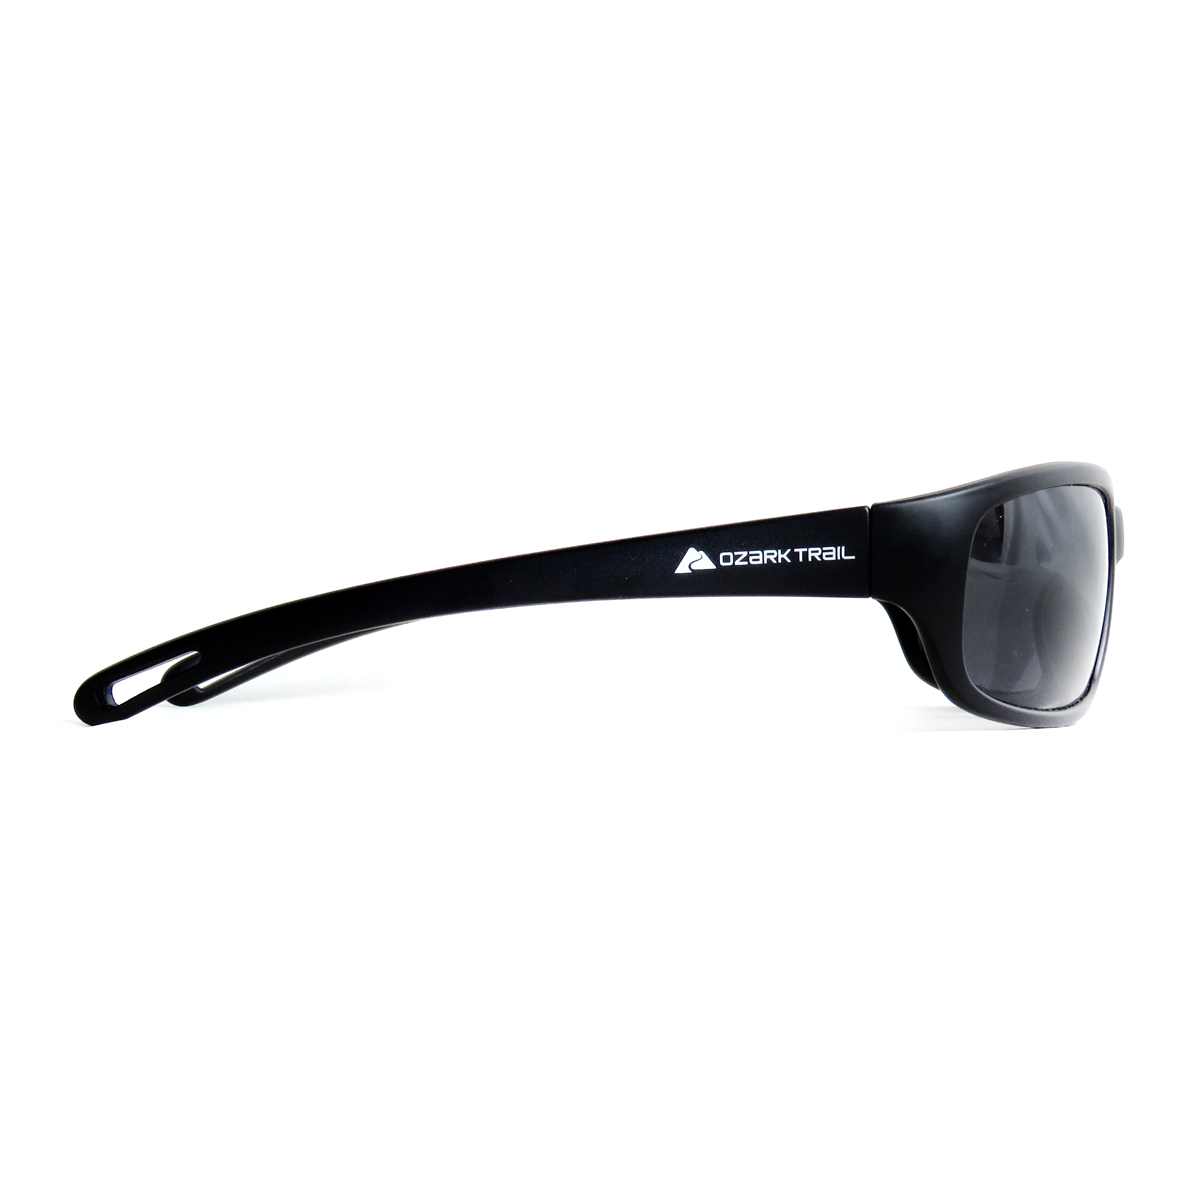 Ozark Trail Men's Polarized Fishing Sunglasses (color may vary) - image 3 of 8